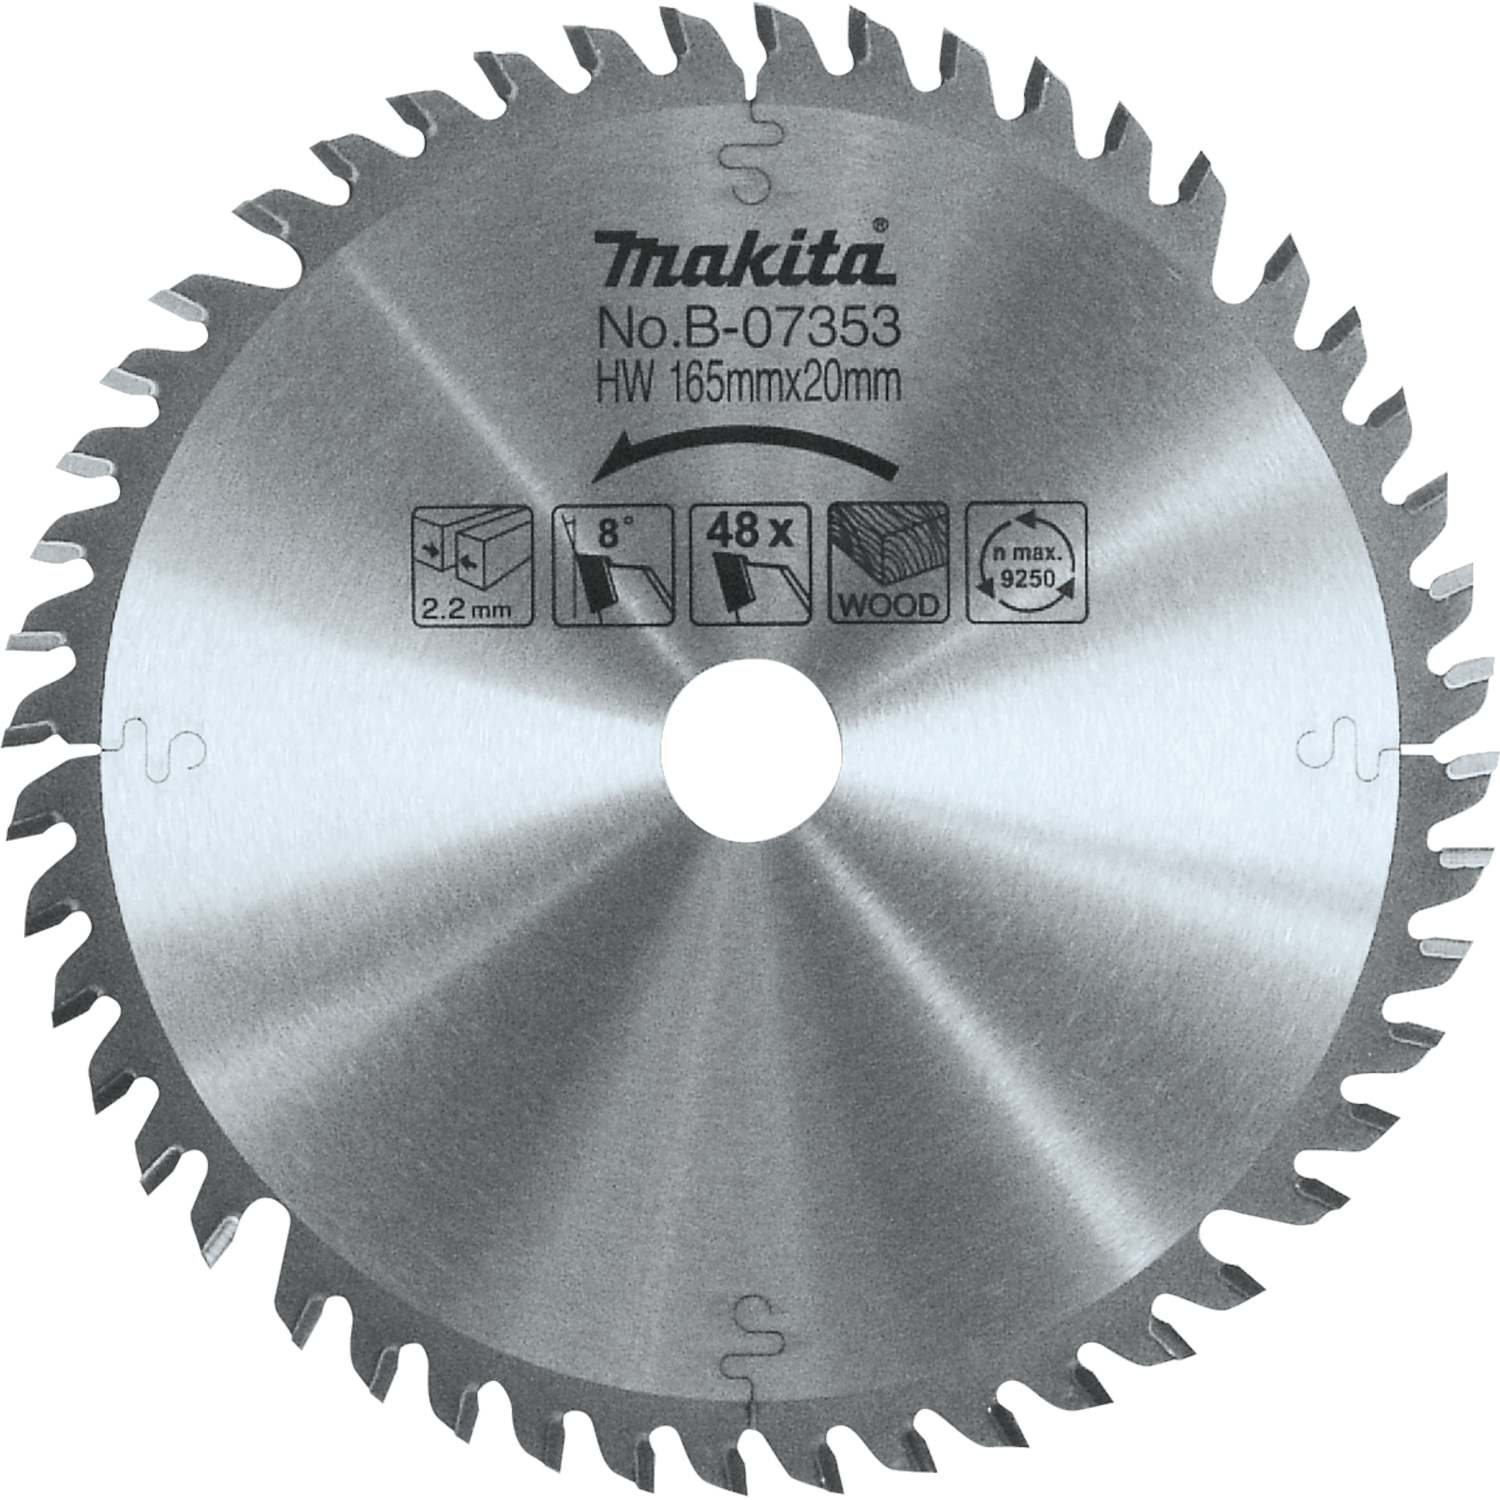 Makita B-07353 6‑1/2" 48T Carbide‑Tipped Plunge Saw Blade